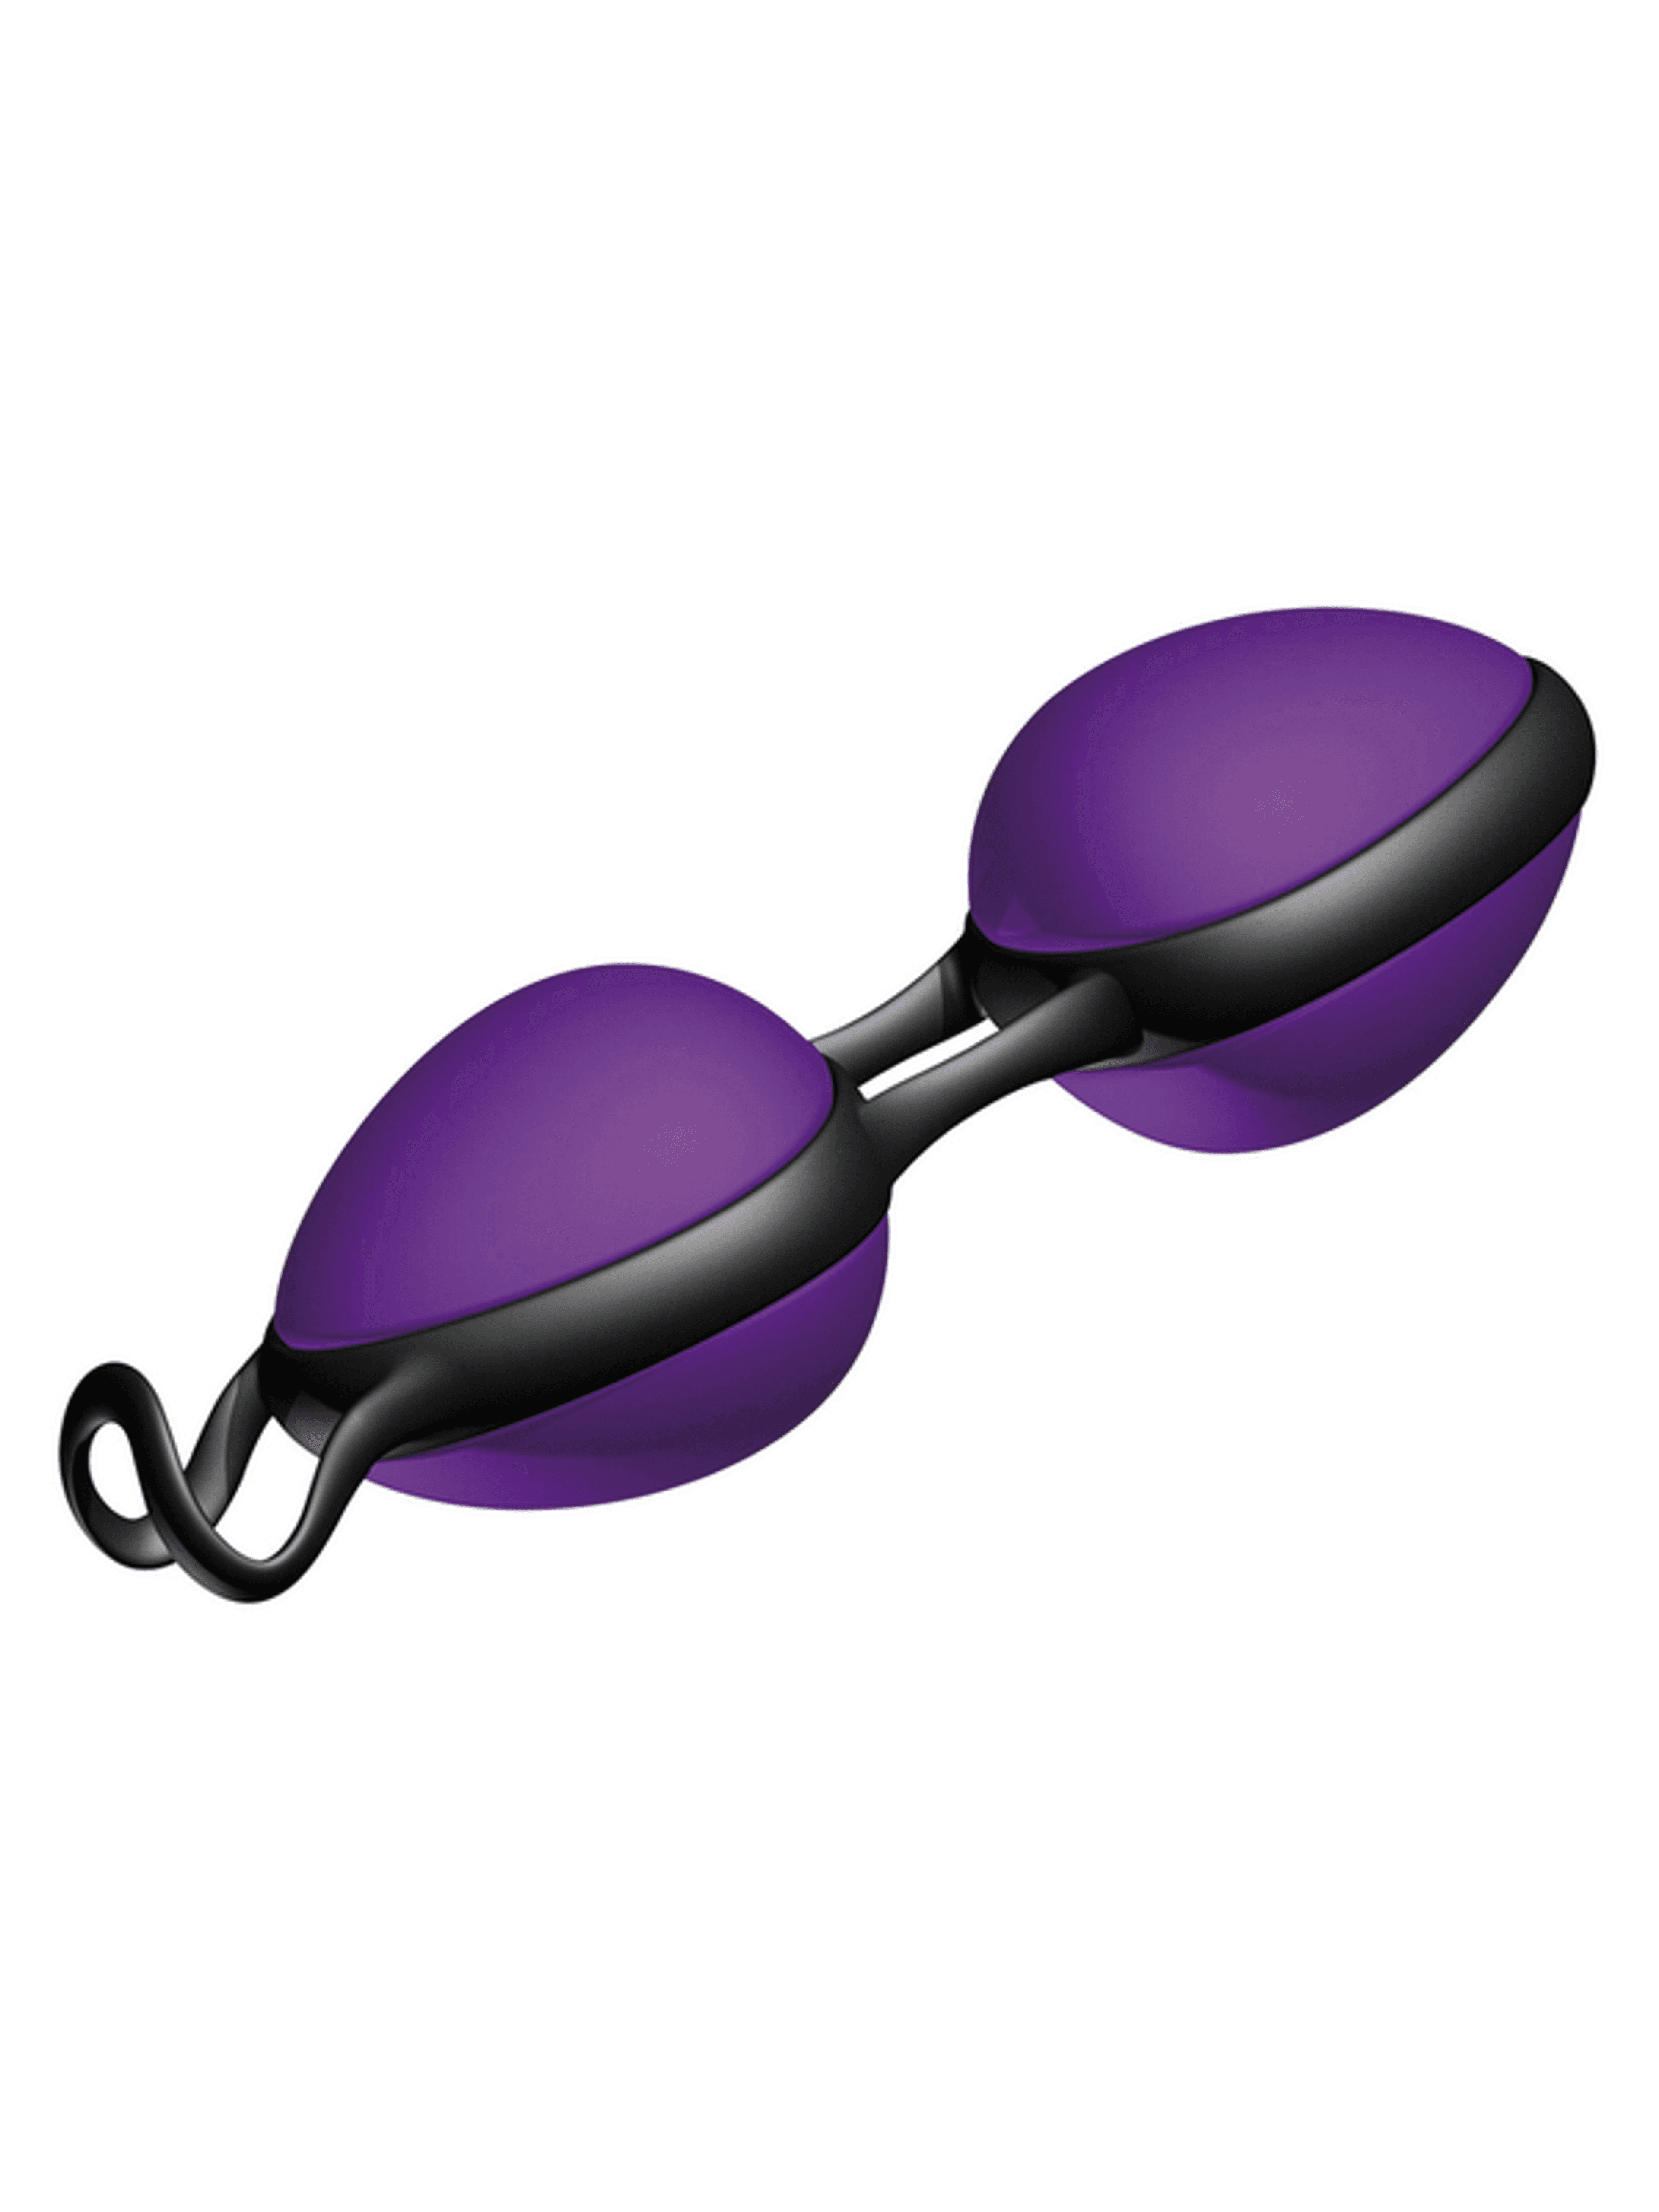 Joydivision Joyballs Secret Set magneta purple black - 1 db-4